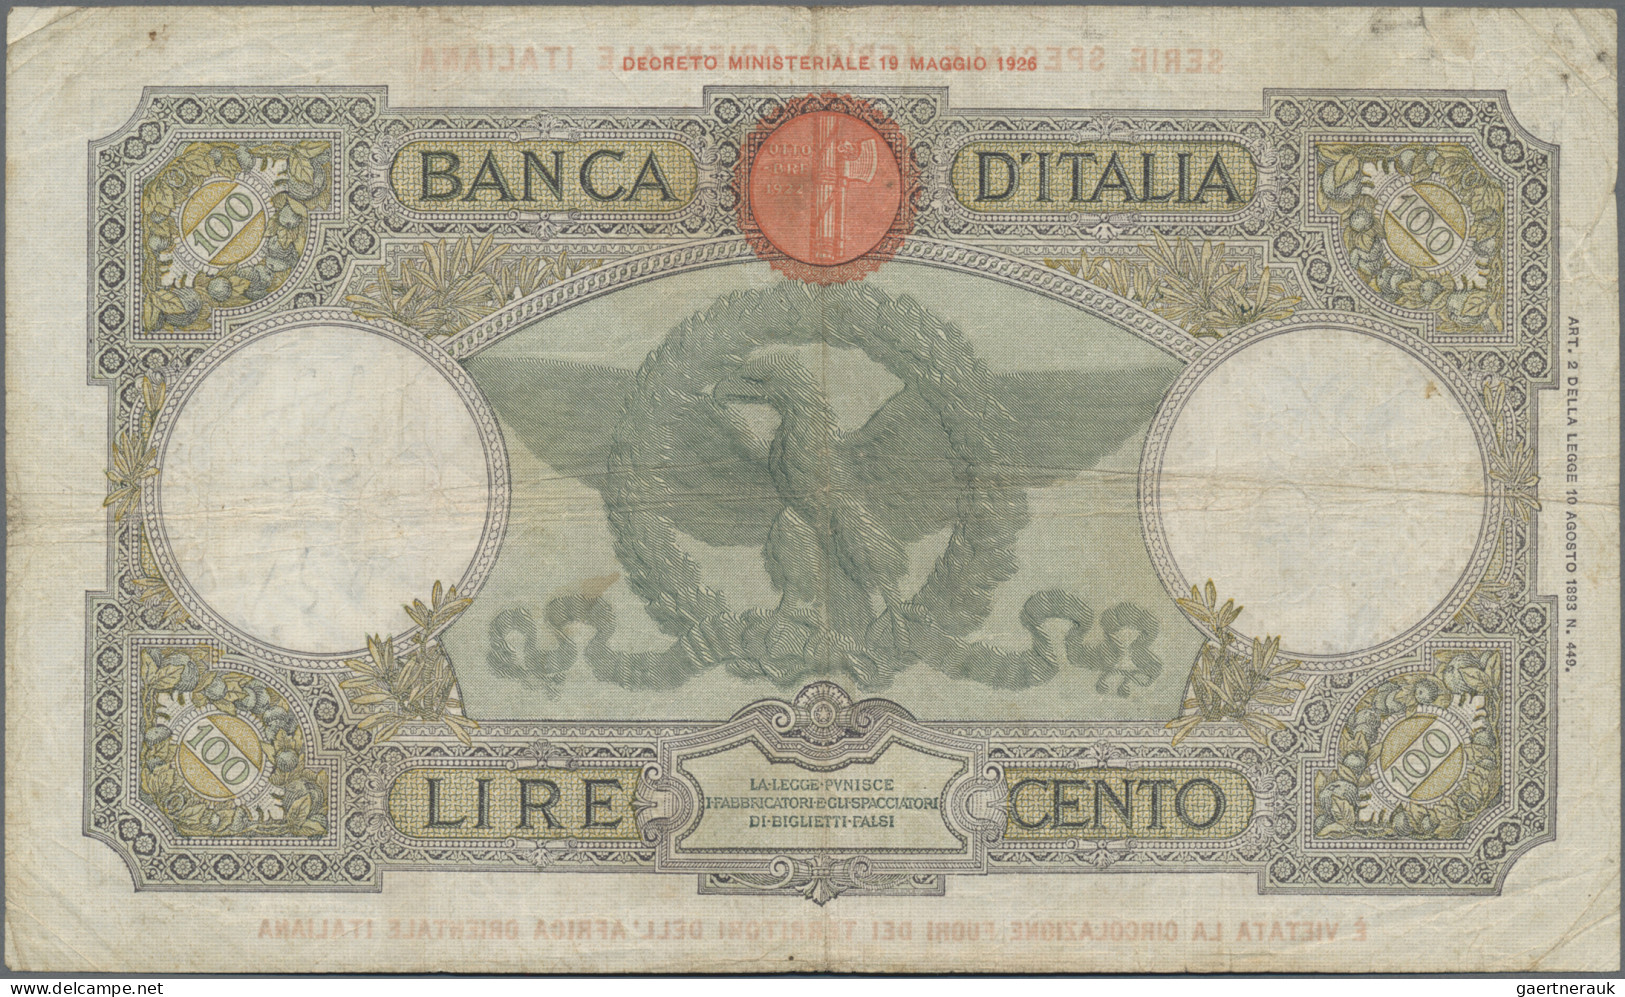 Italian East Africa: Banca D'Italia – With Overprint "SERIE SPECIALE AFRICA ORIE - Italiaans Oost-Afrika